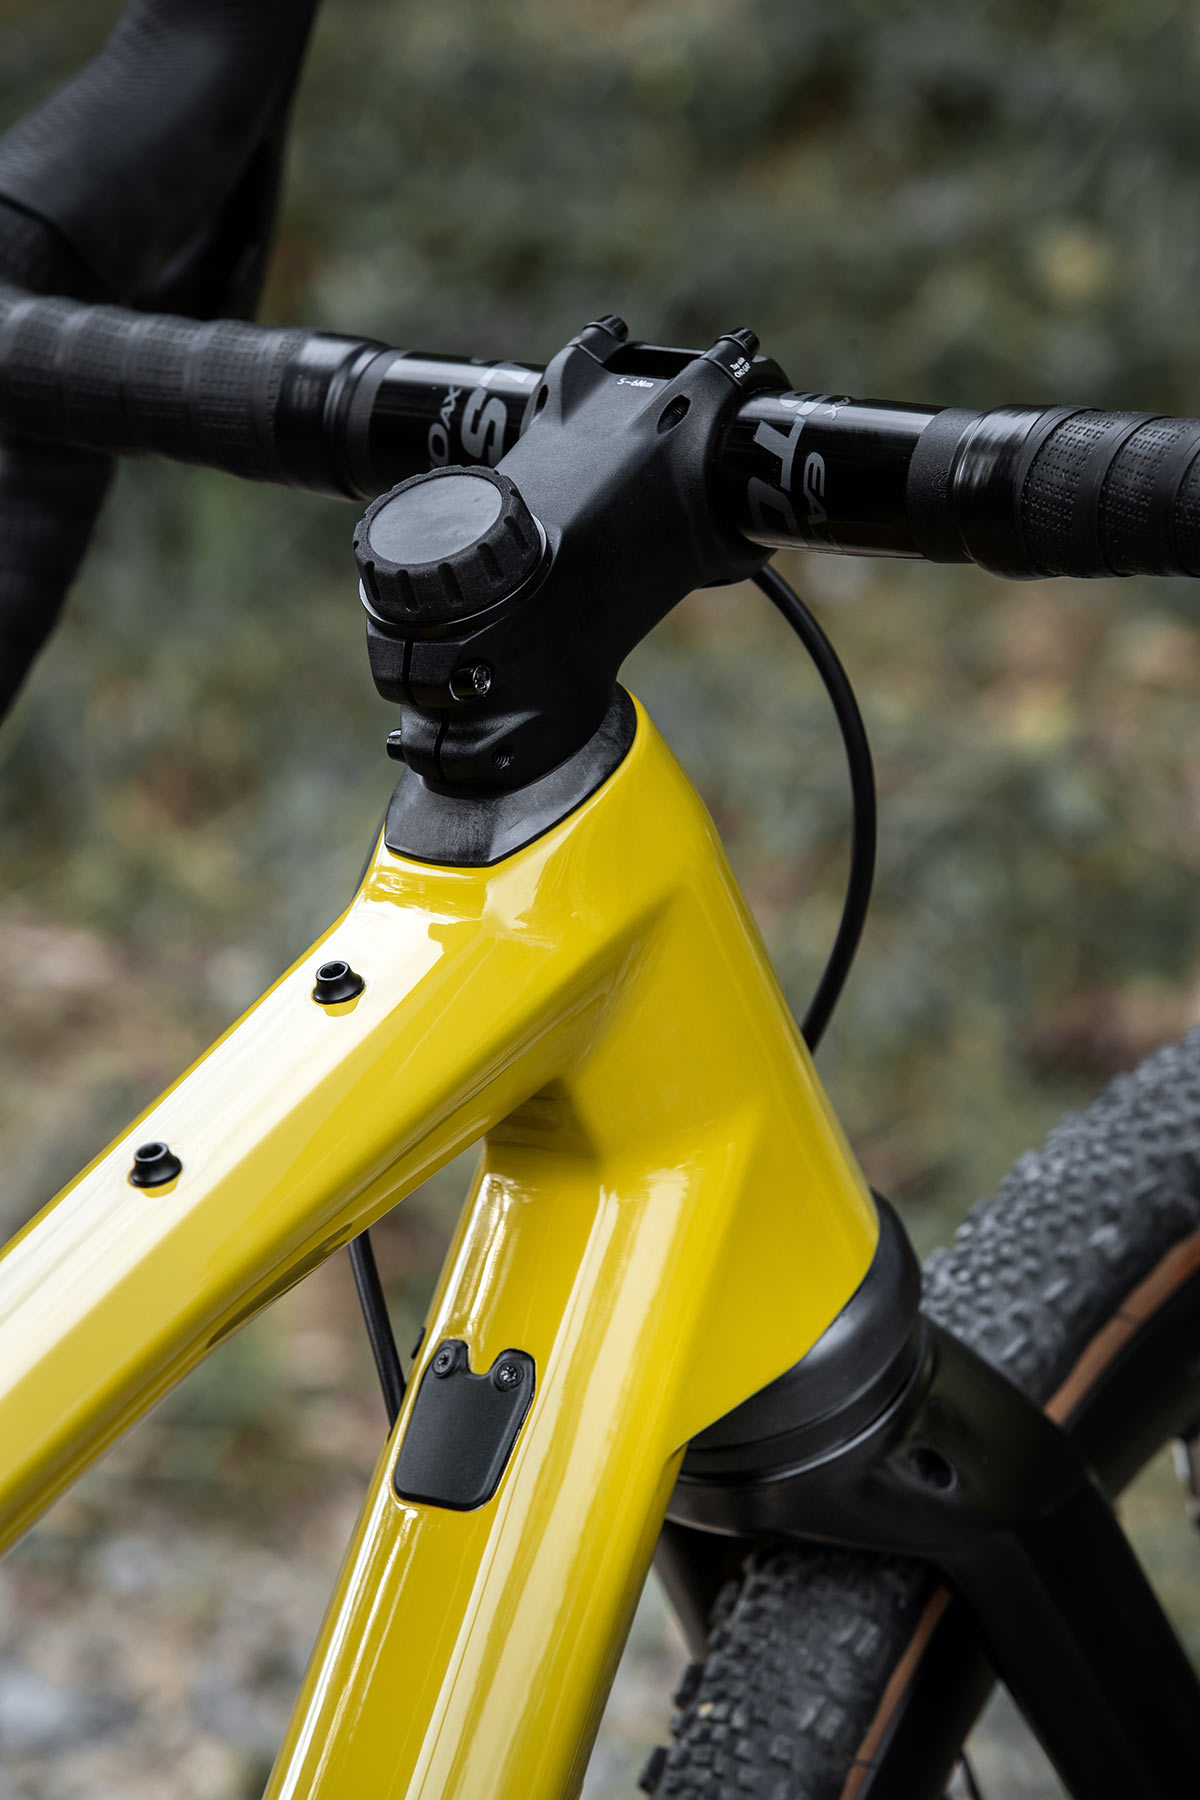 bmc urs lt full suspension gravel bike closeup on fork lockout and top tube mounts